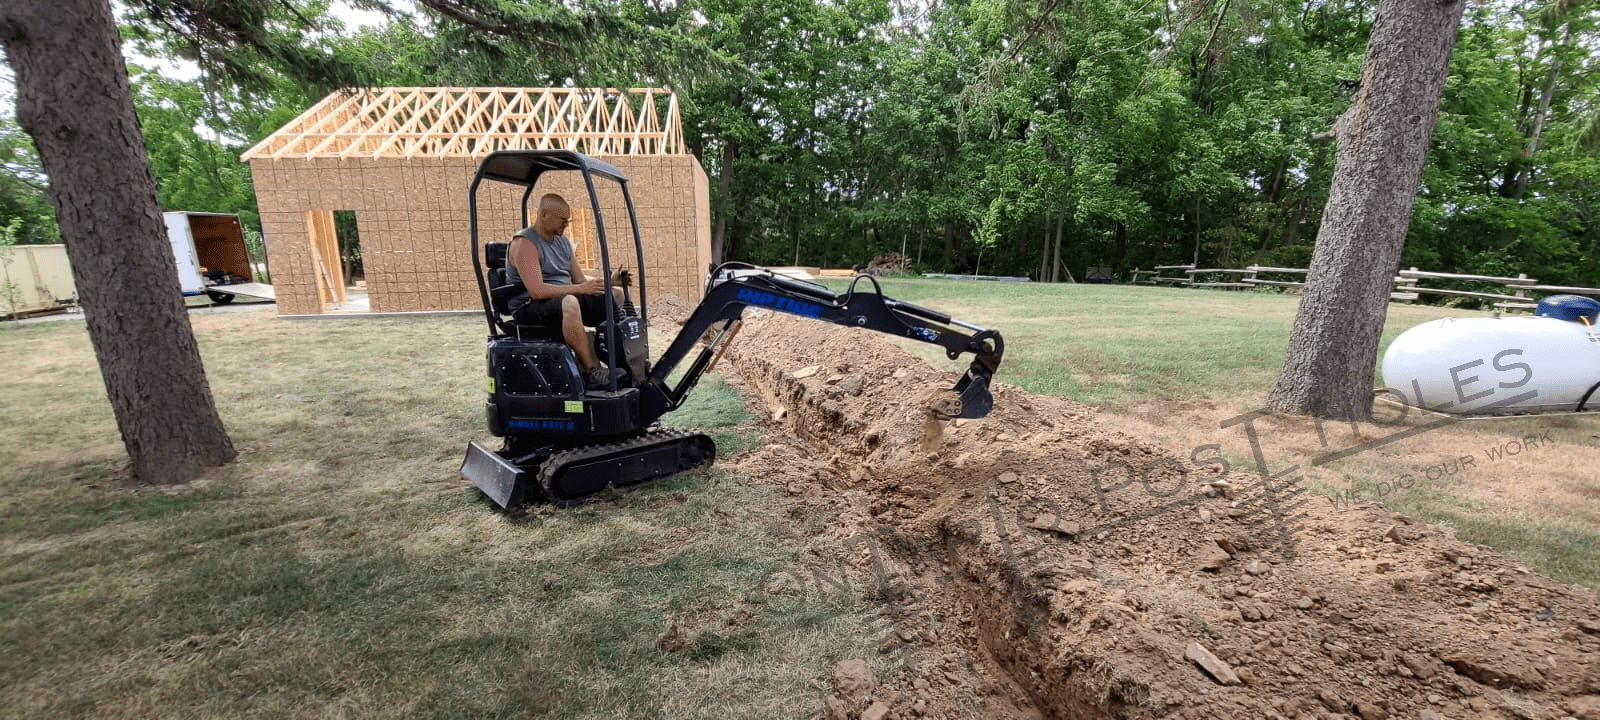 Mini excavator digging into the ground